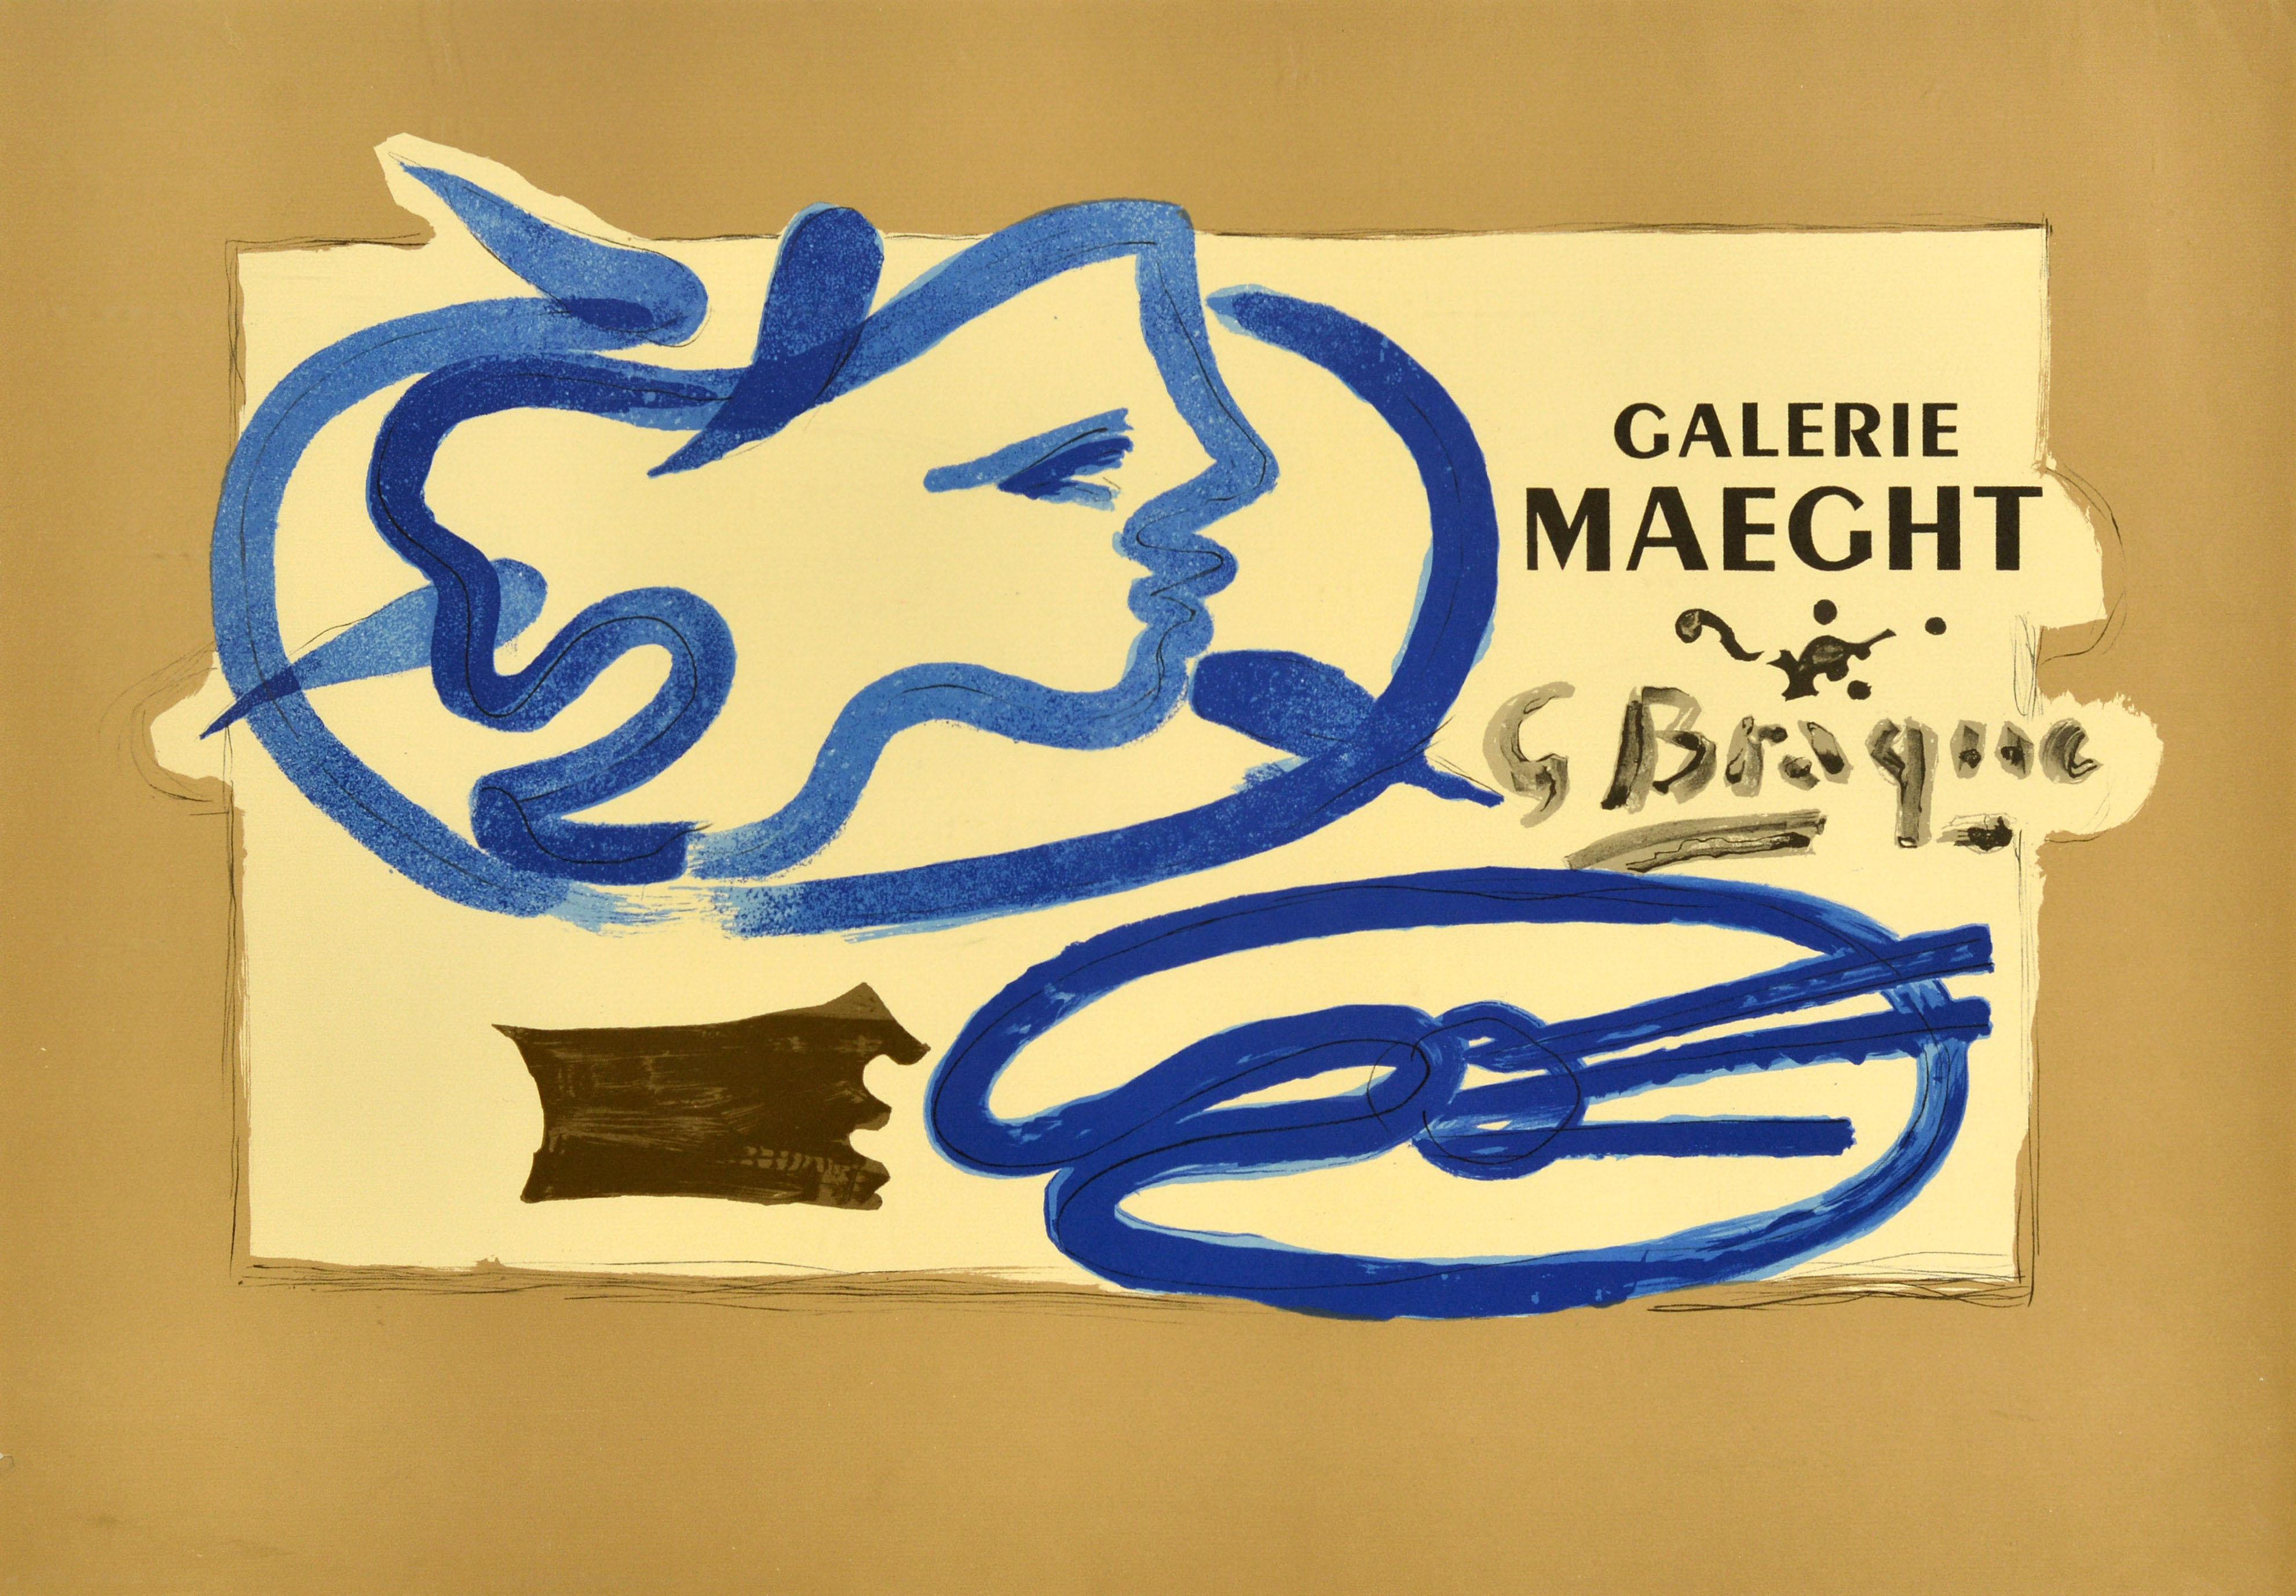 Unknown Print - Original Vintage Art Exhibition Advertising Poster Georges Braque Galerie Maeght